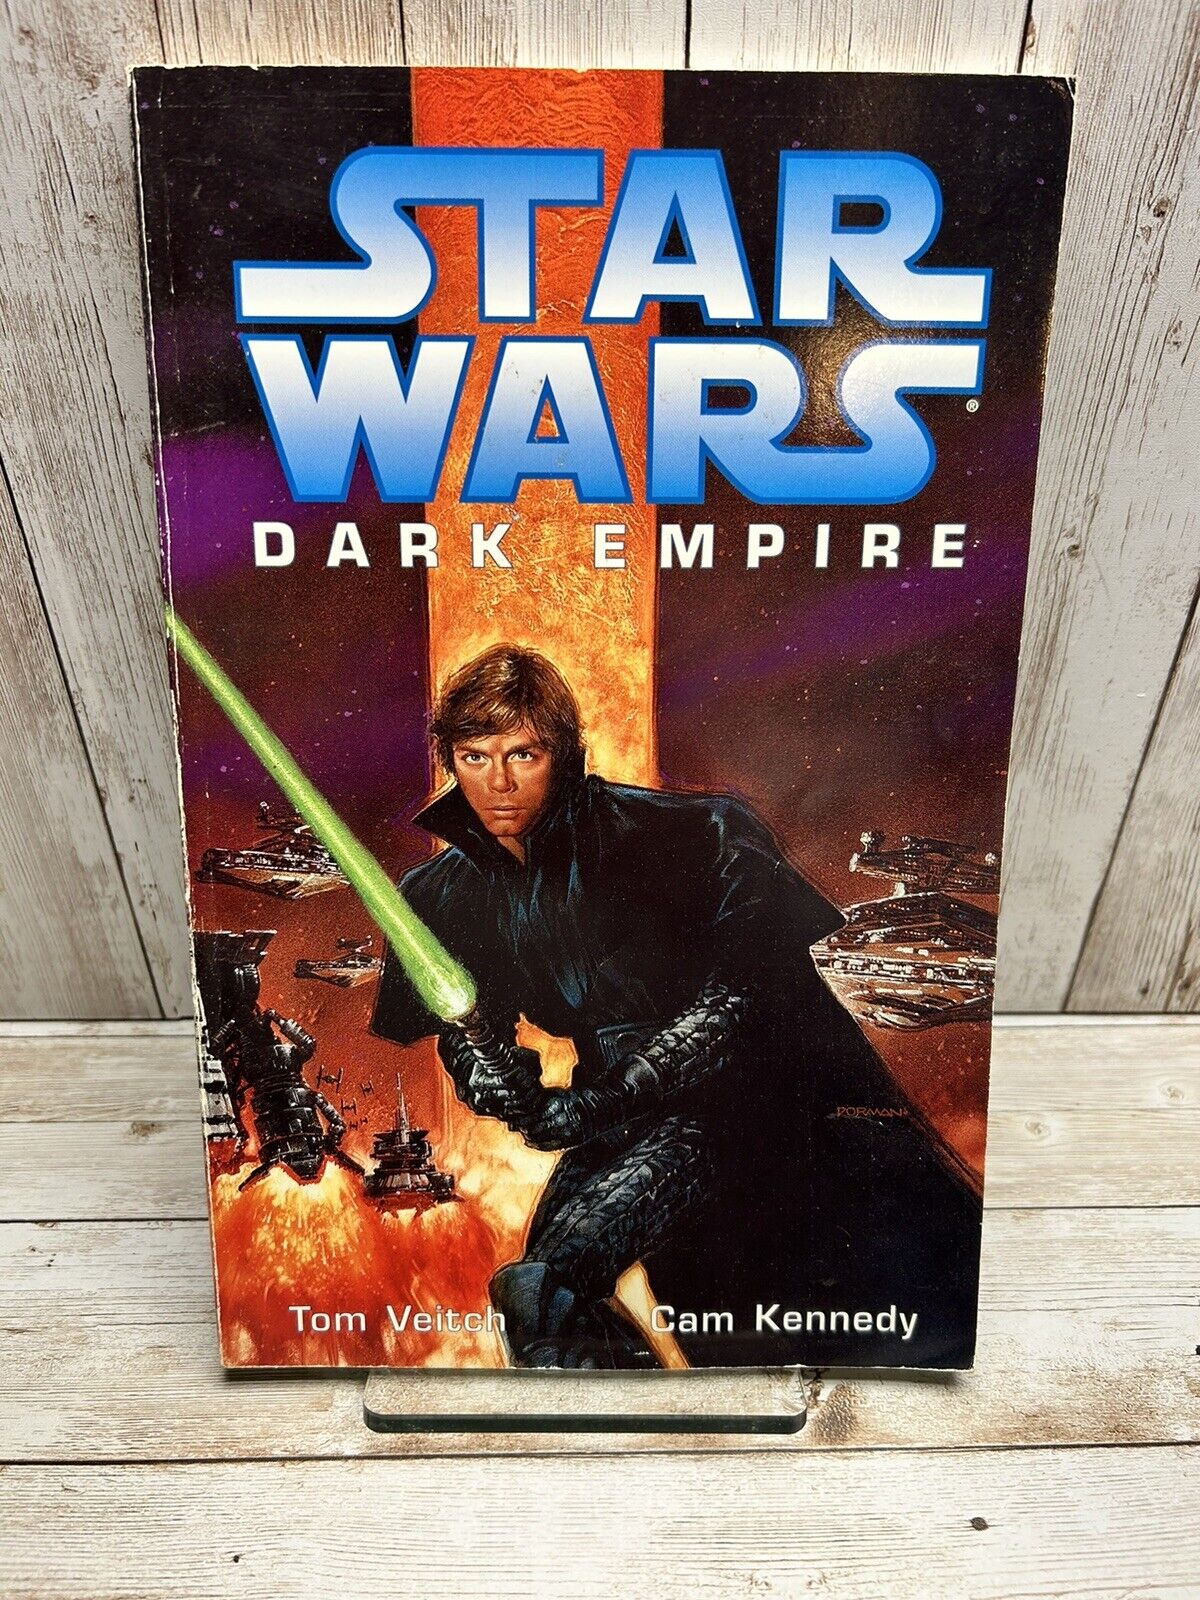 Star Wars: Dark Empire by Kurt Busiek (second edition 1995, Trade Paperback)